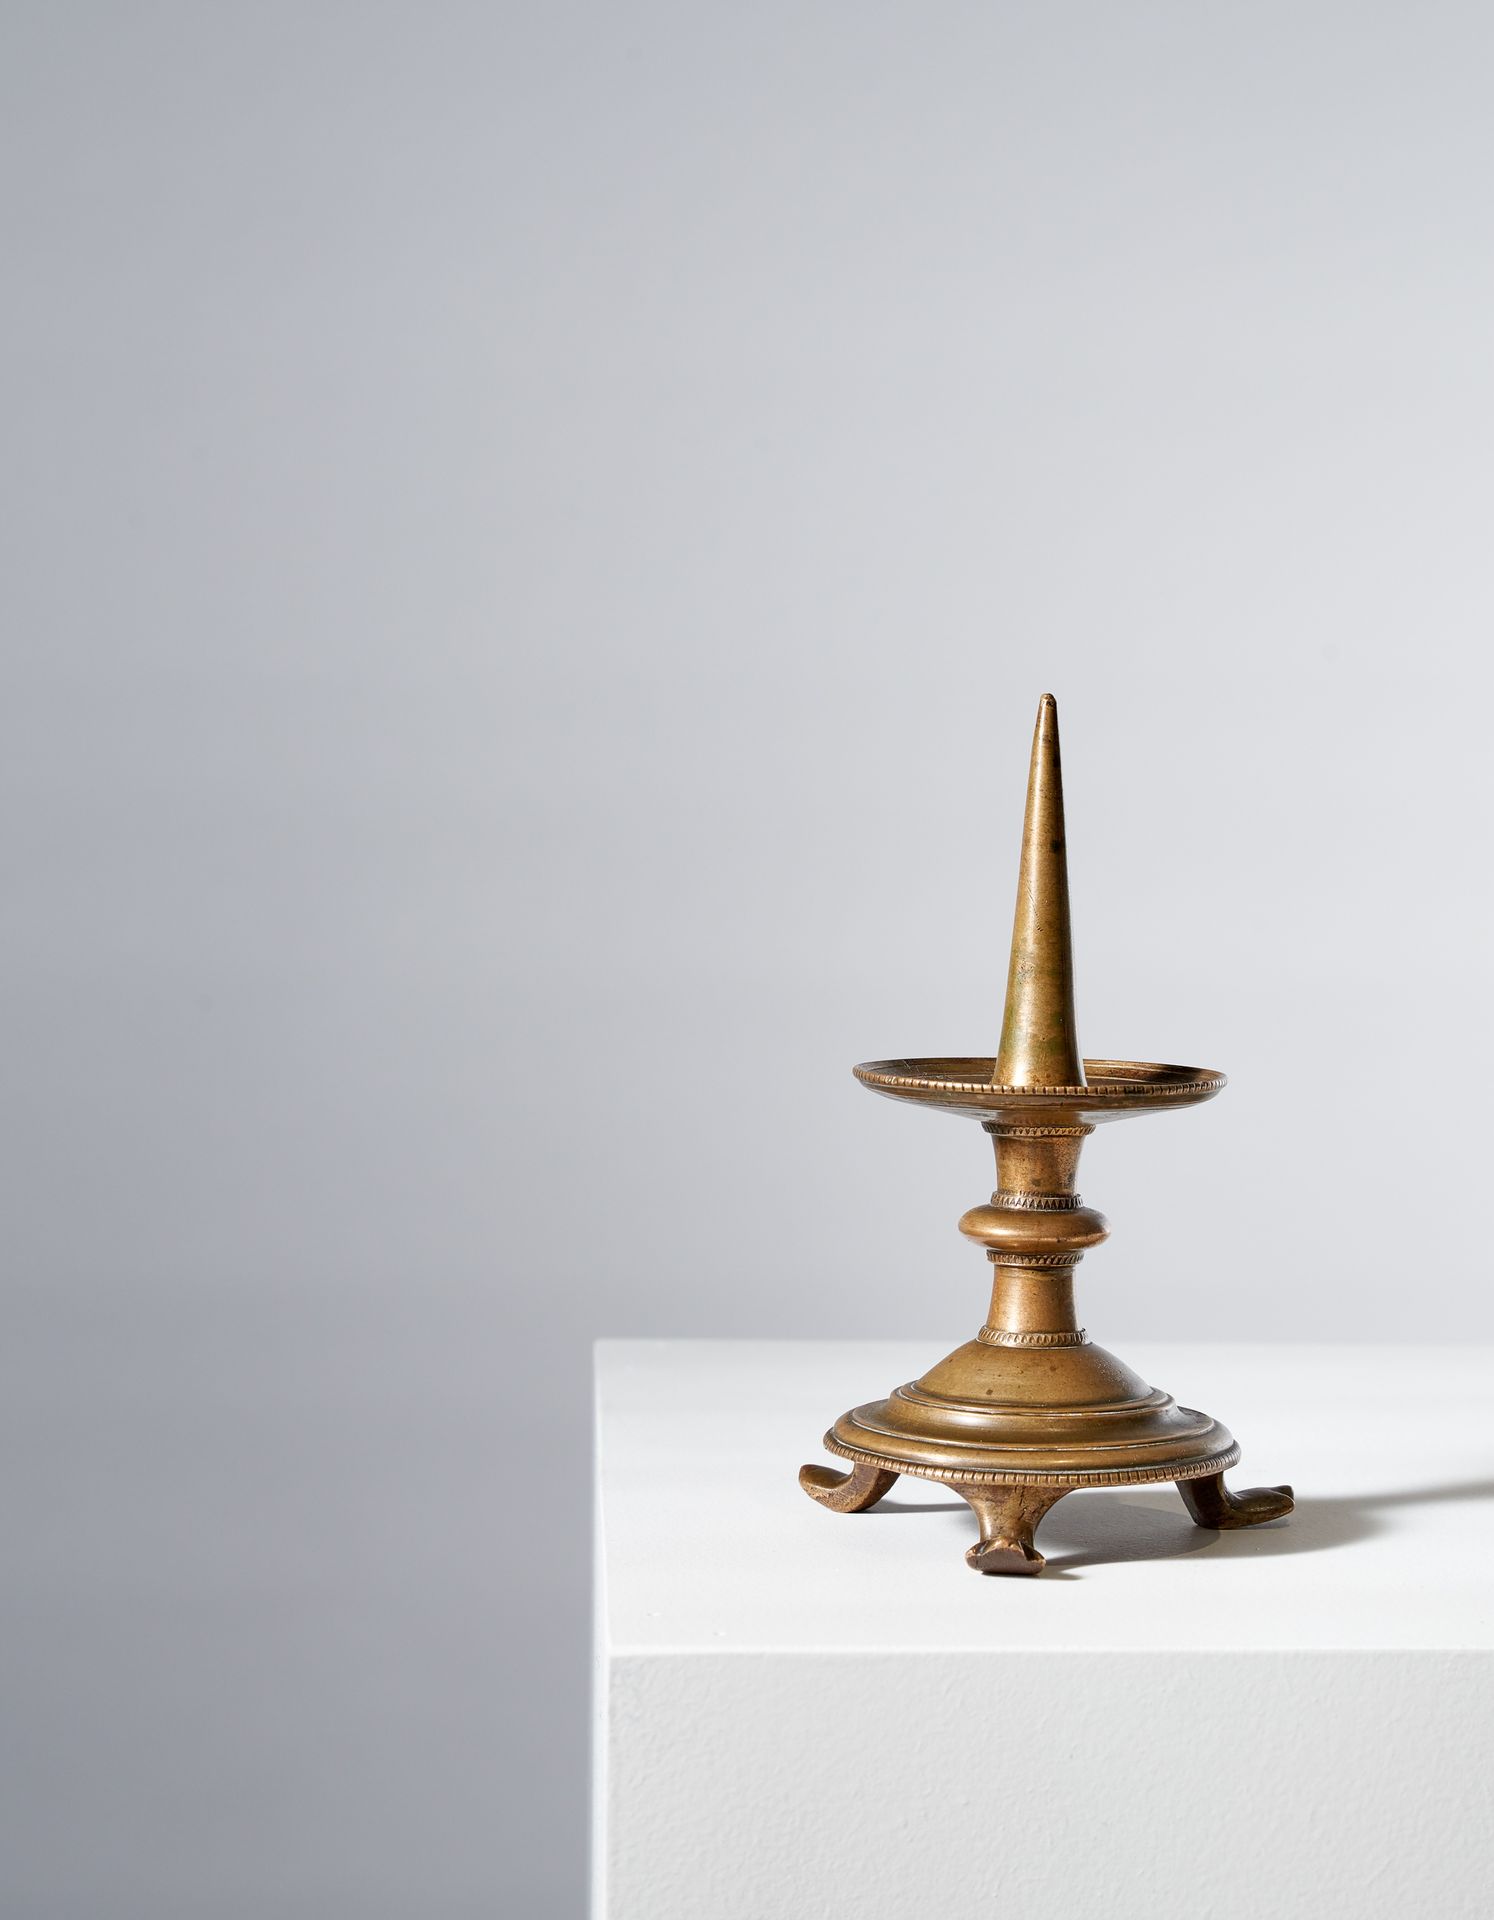 Null 罕见的青铜三角烛台

13世纪

有风格化的爪形脚。

高：15厘米